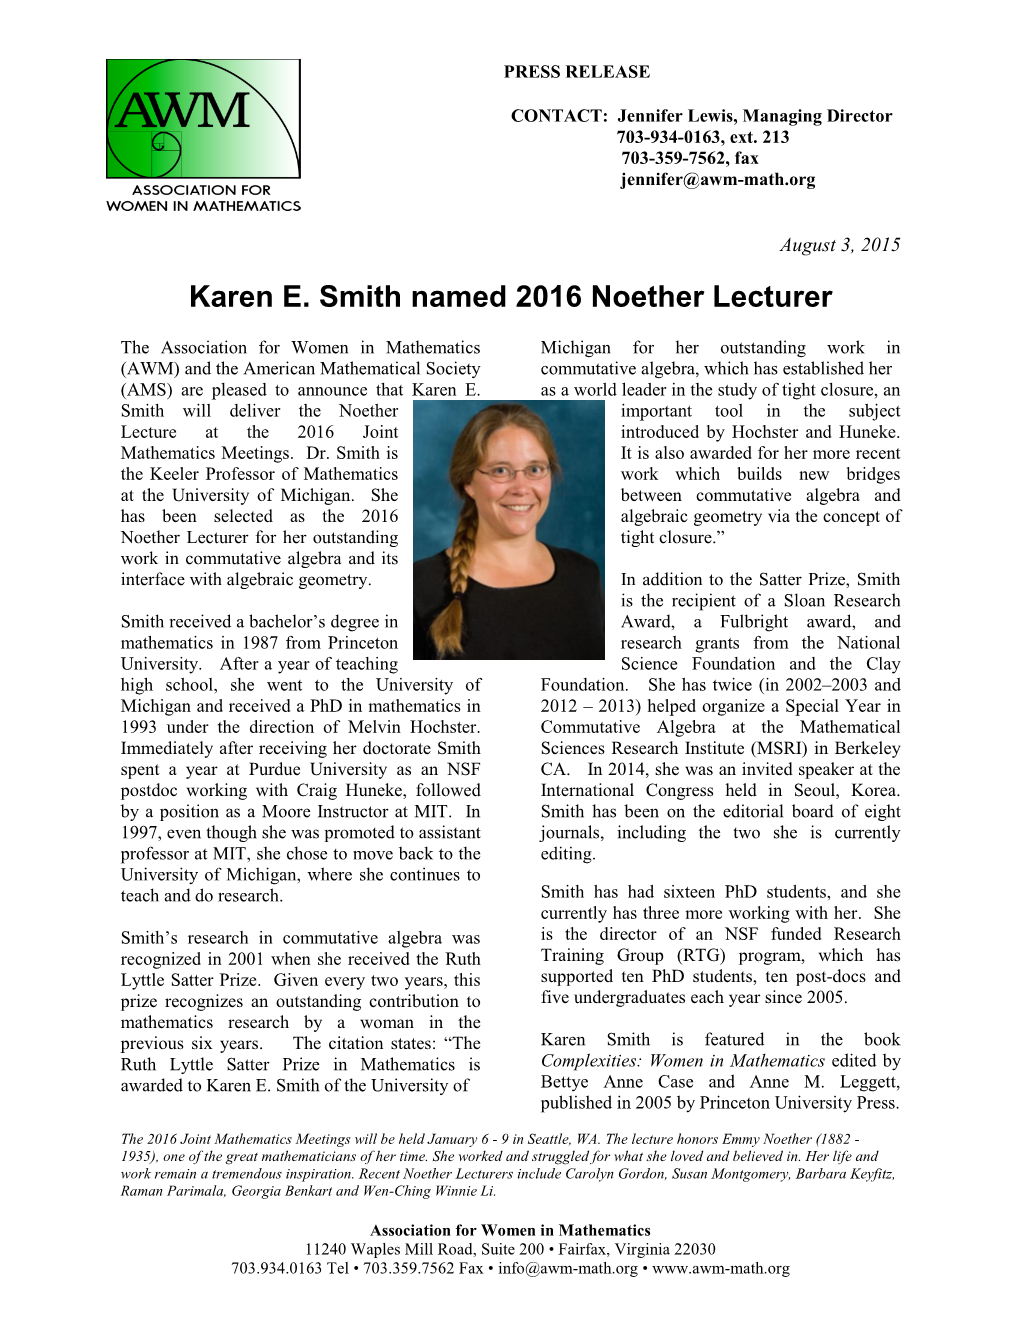 Karen E. Smith Named 2016 Noether Lecturer